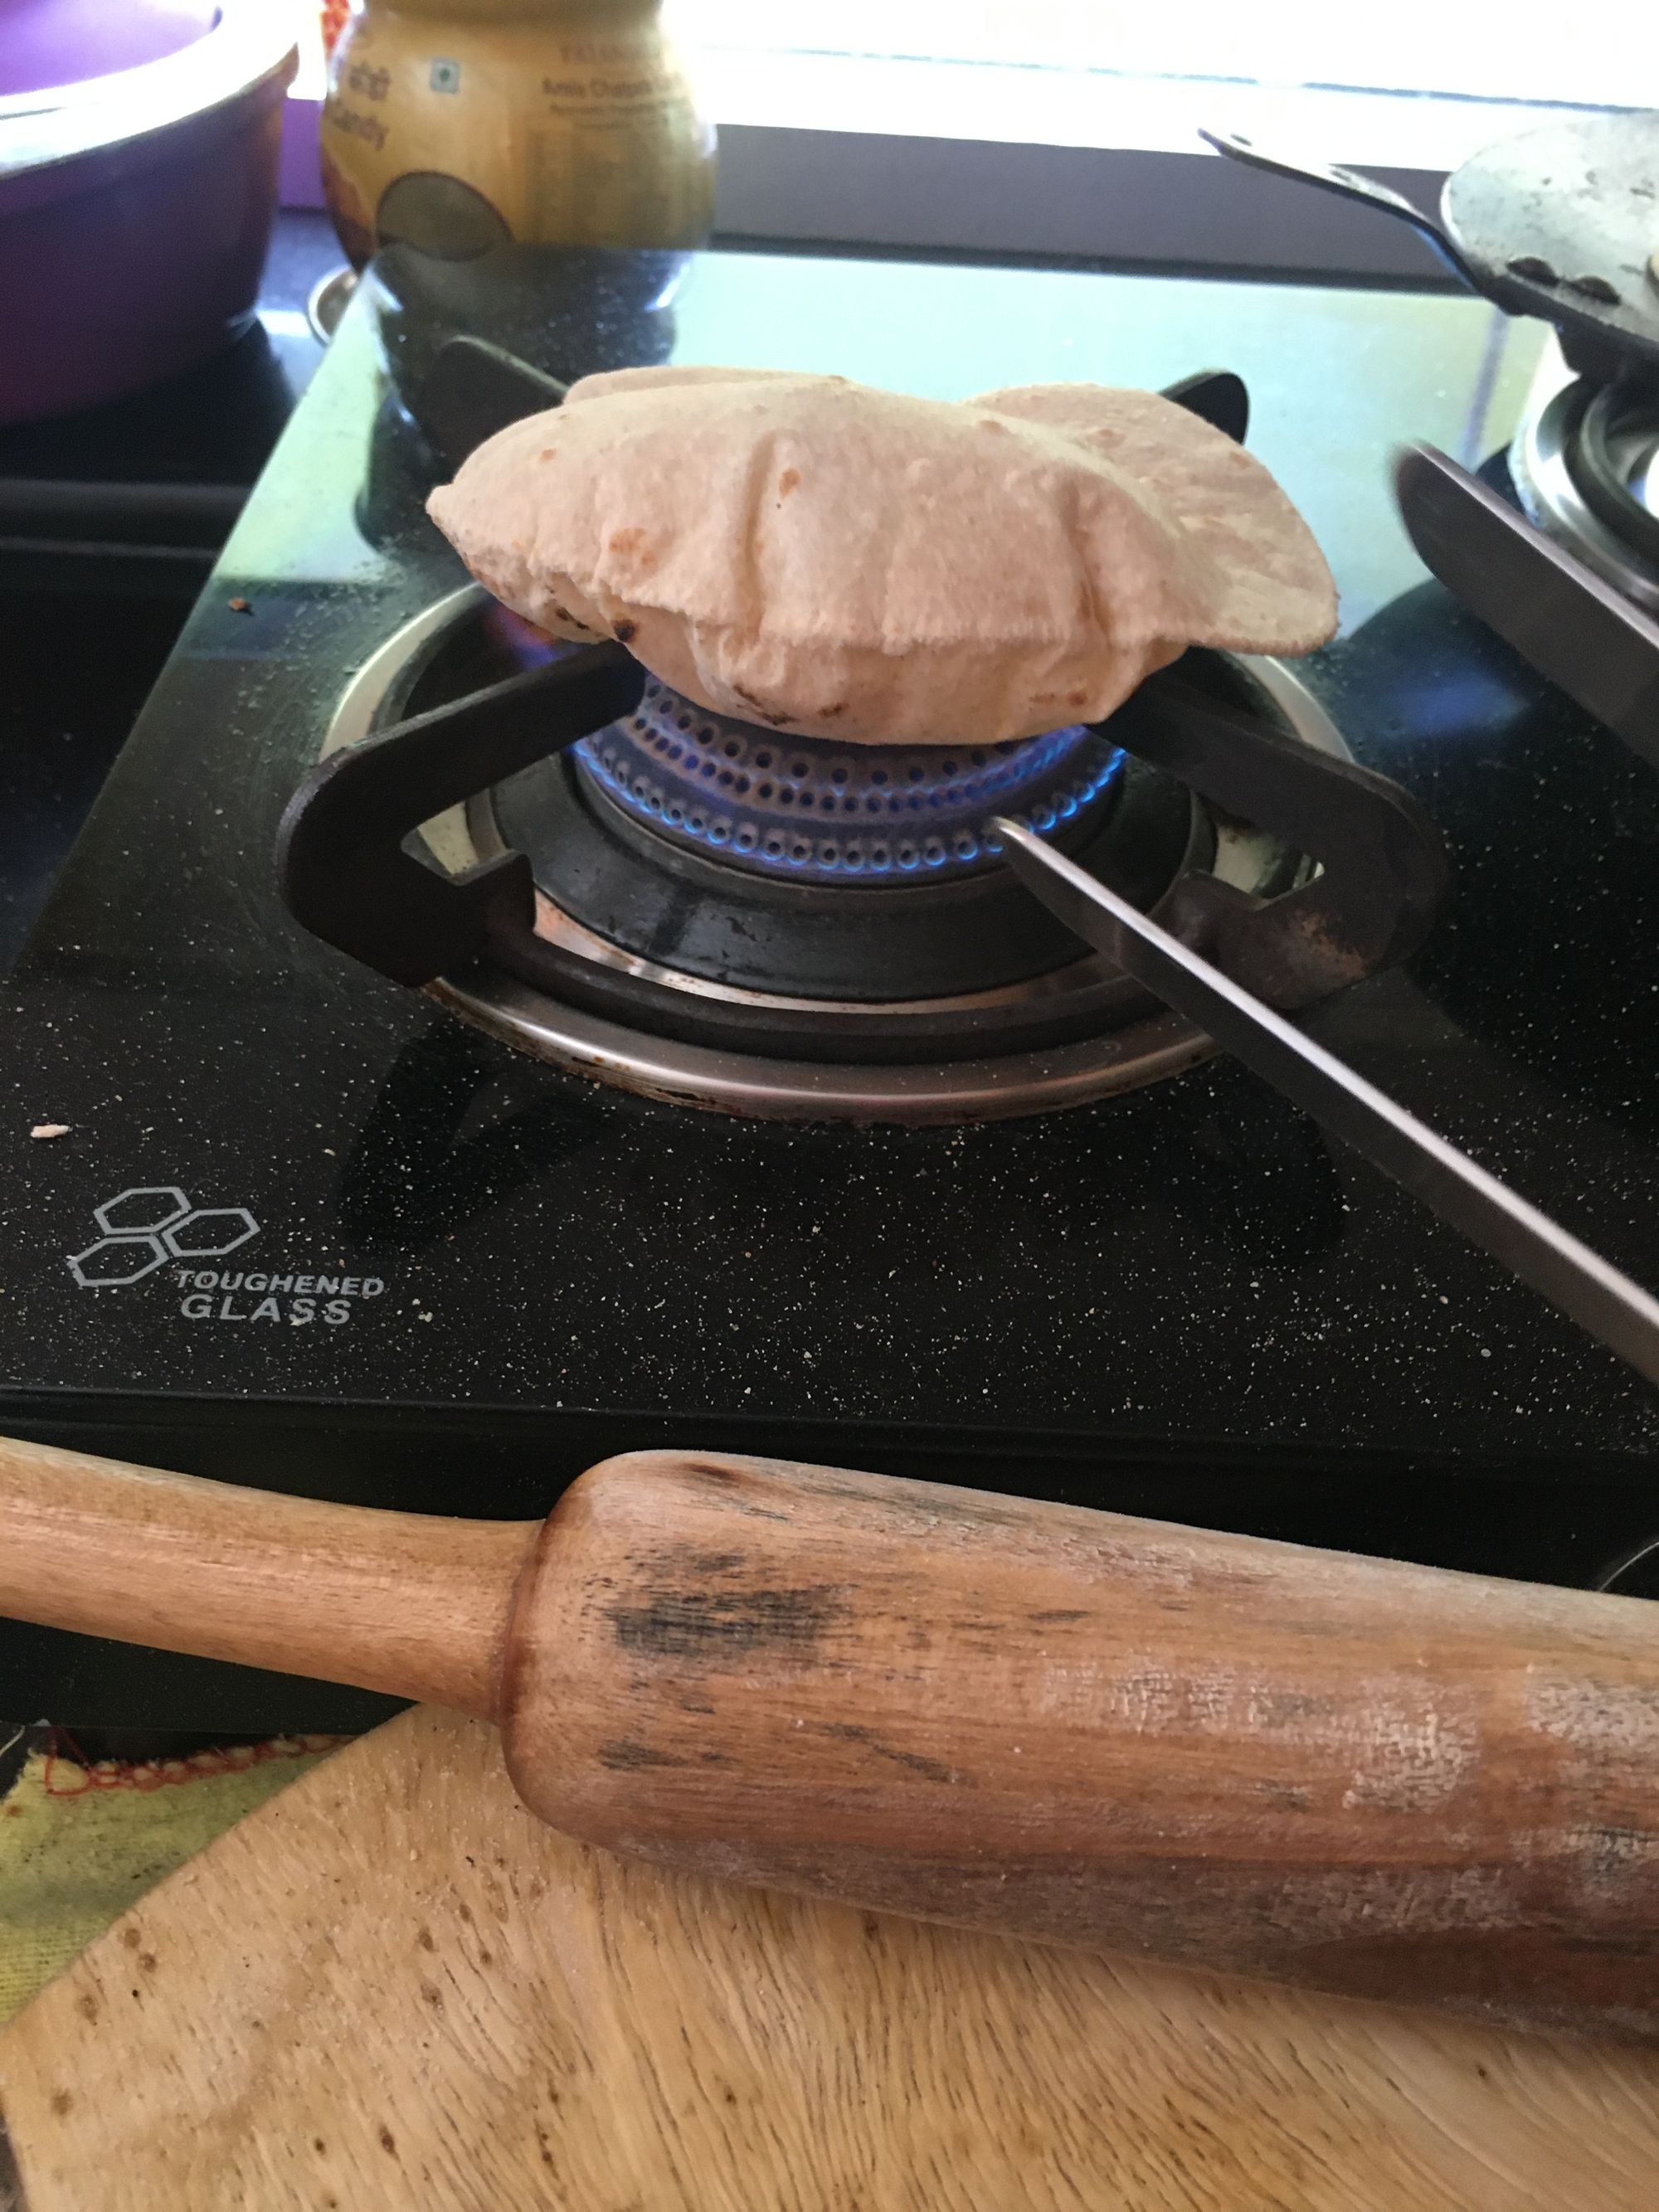 How to make soft chapati or roti or phulka?